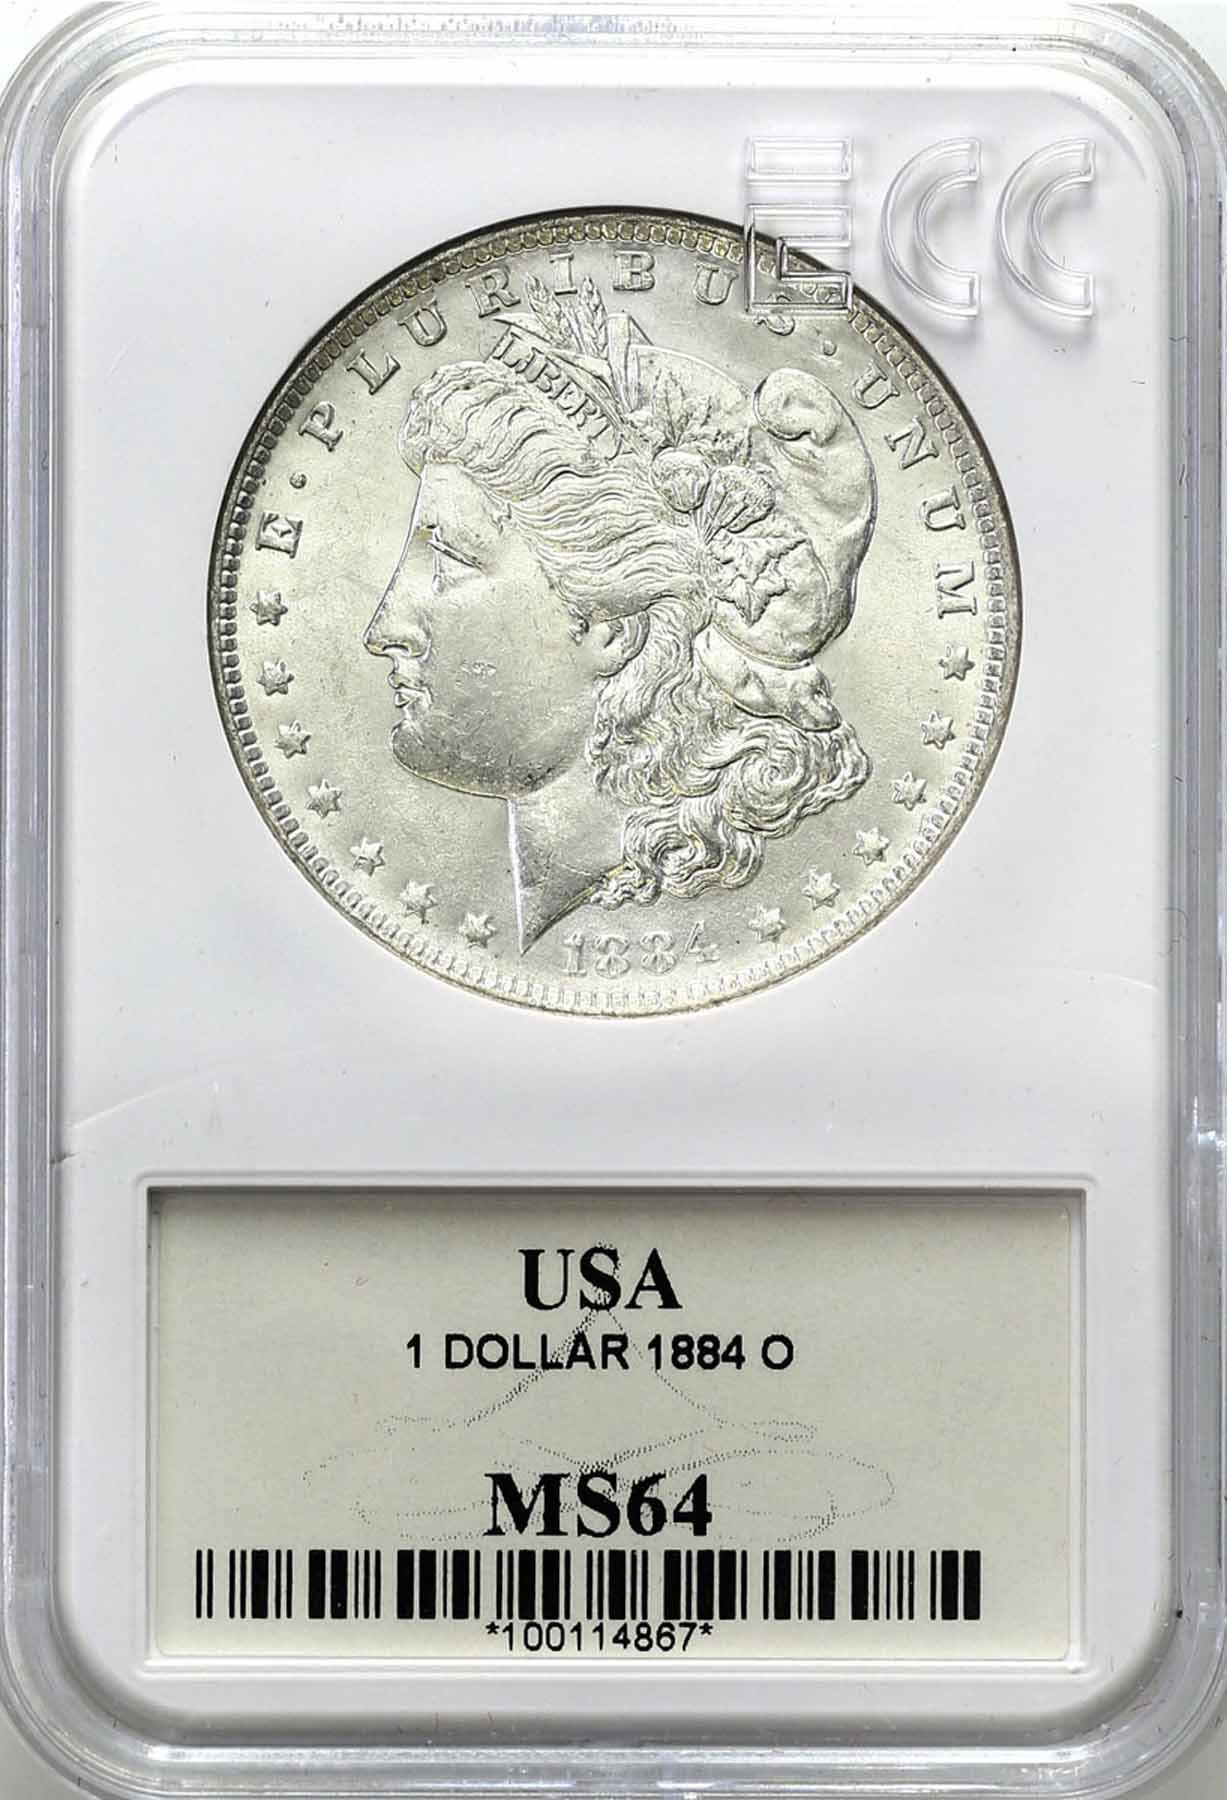 USA. Dolar 1884 O, Nowy Orlean GCN MS64 – PIĘKNY